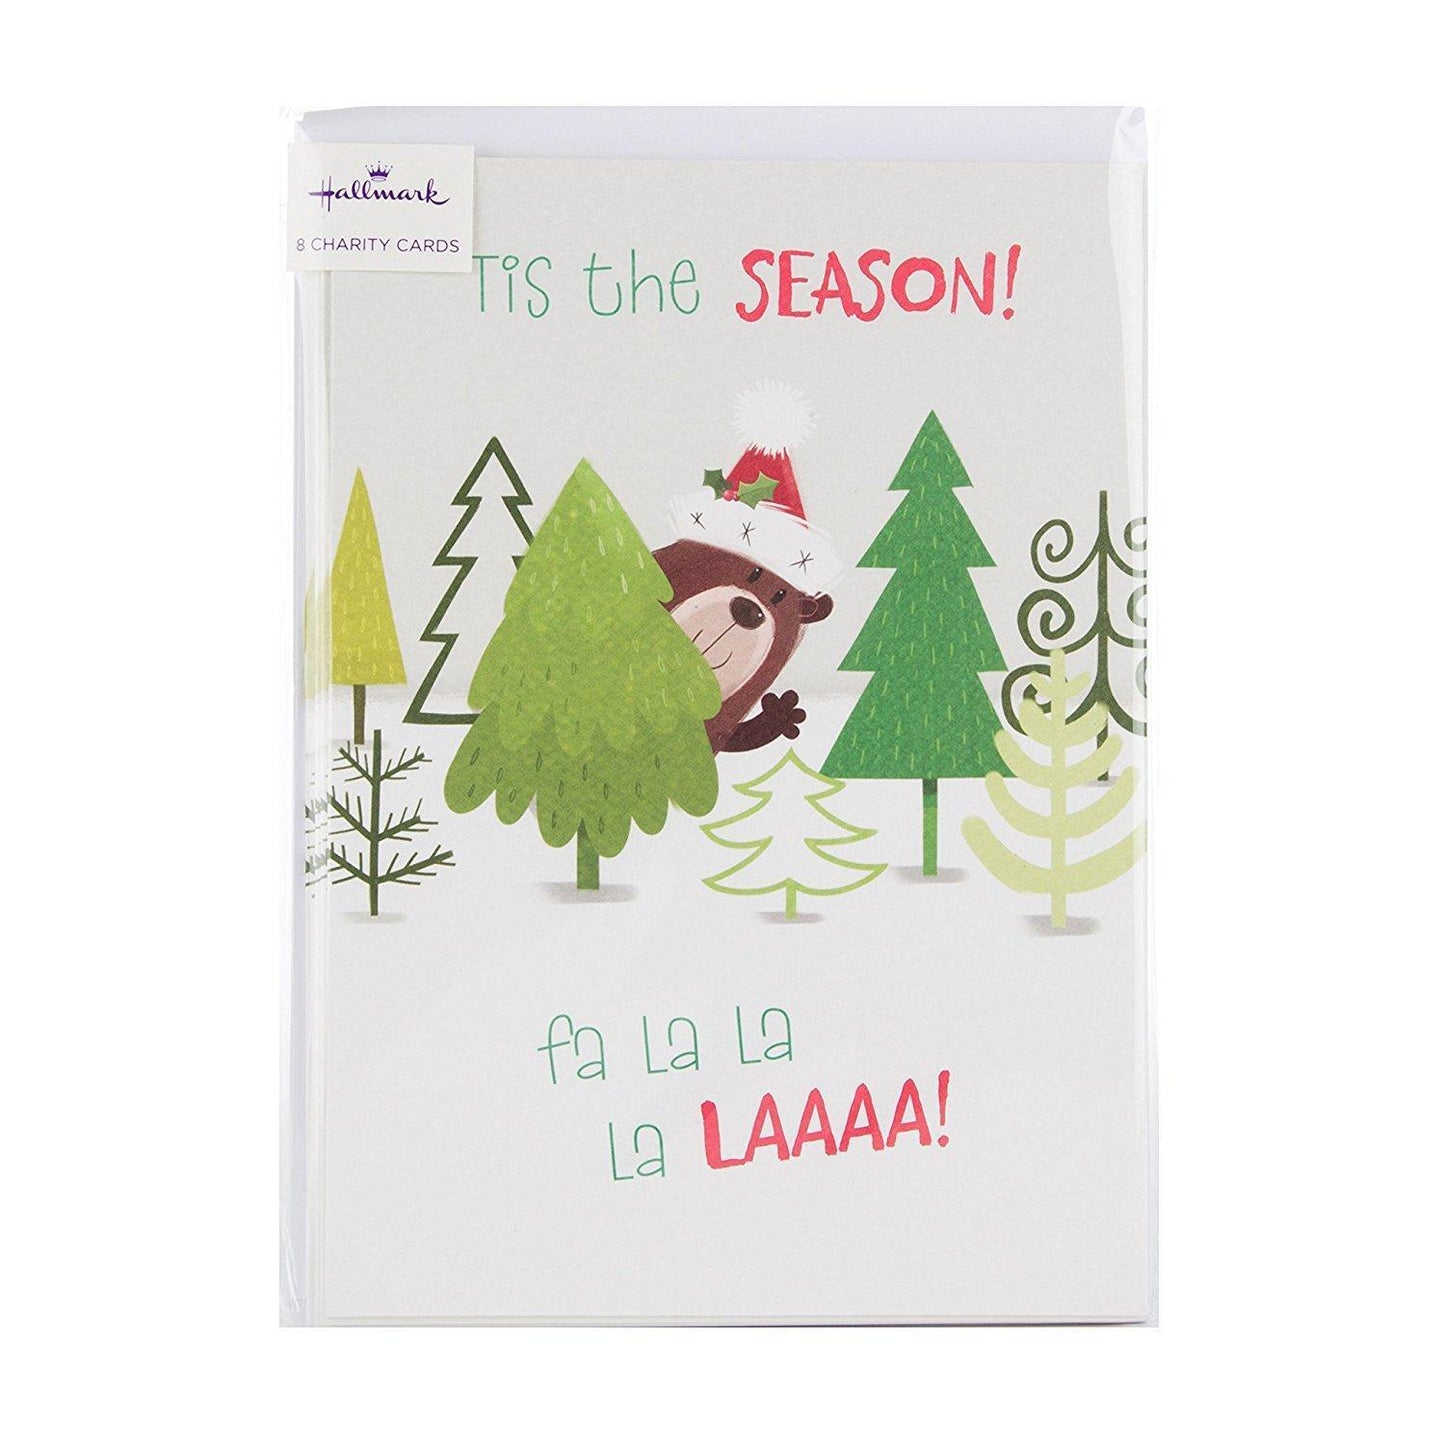 Hallmark Christmas Charity Card Pack "Tis The Season" - Pack of 8 